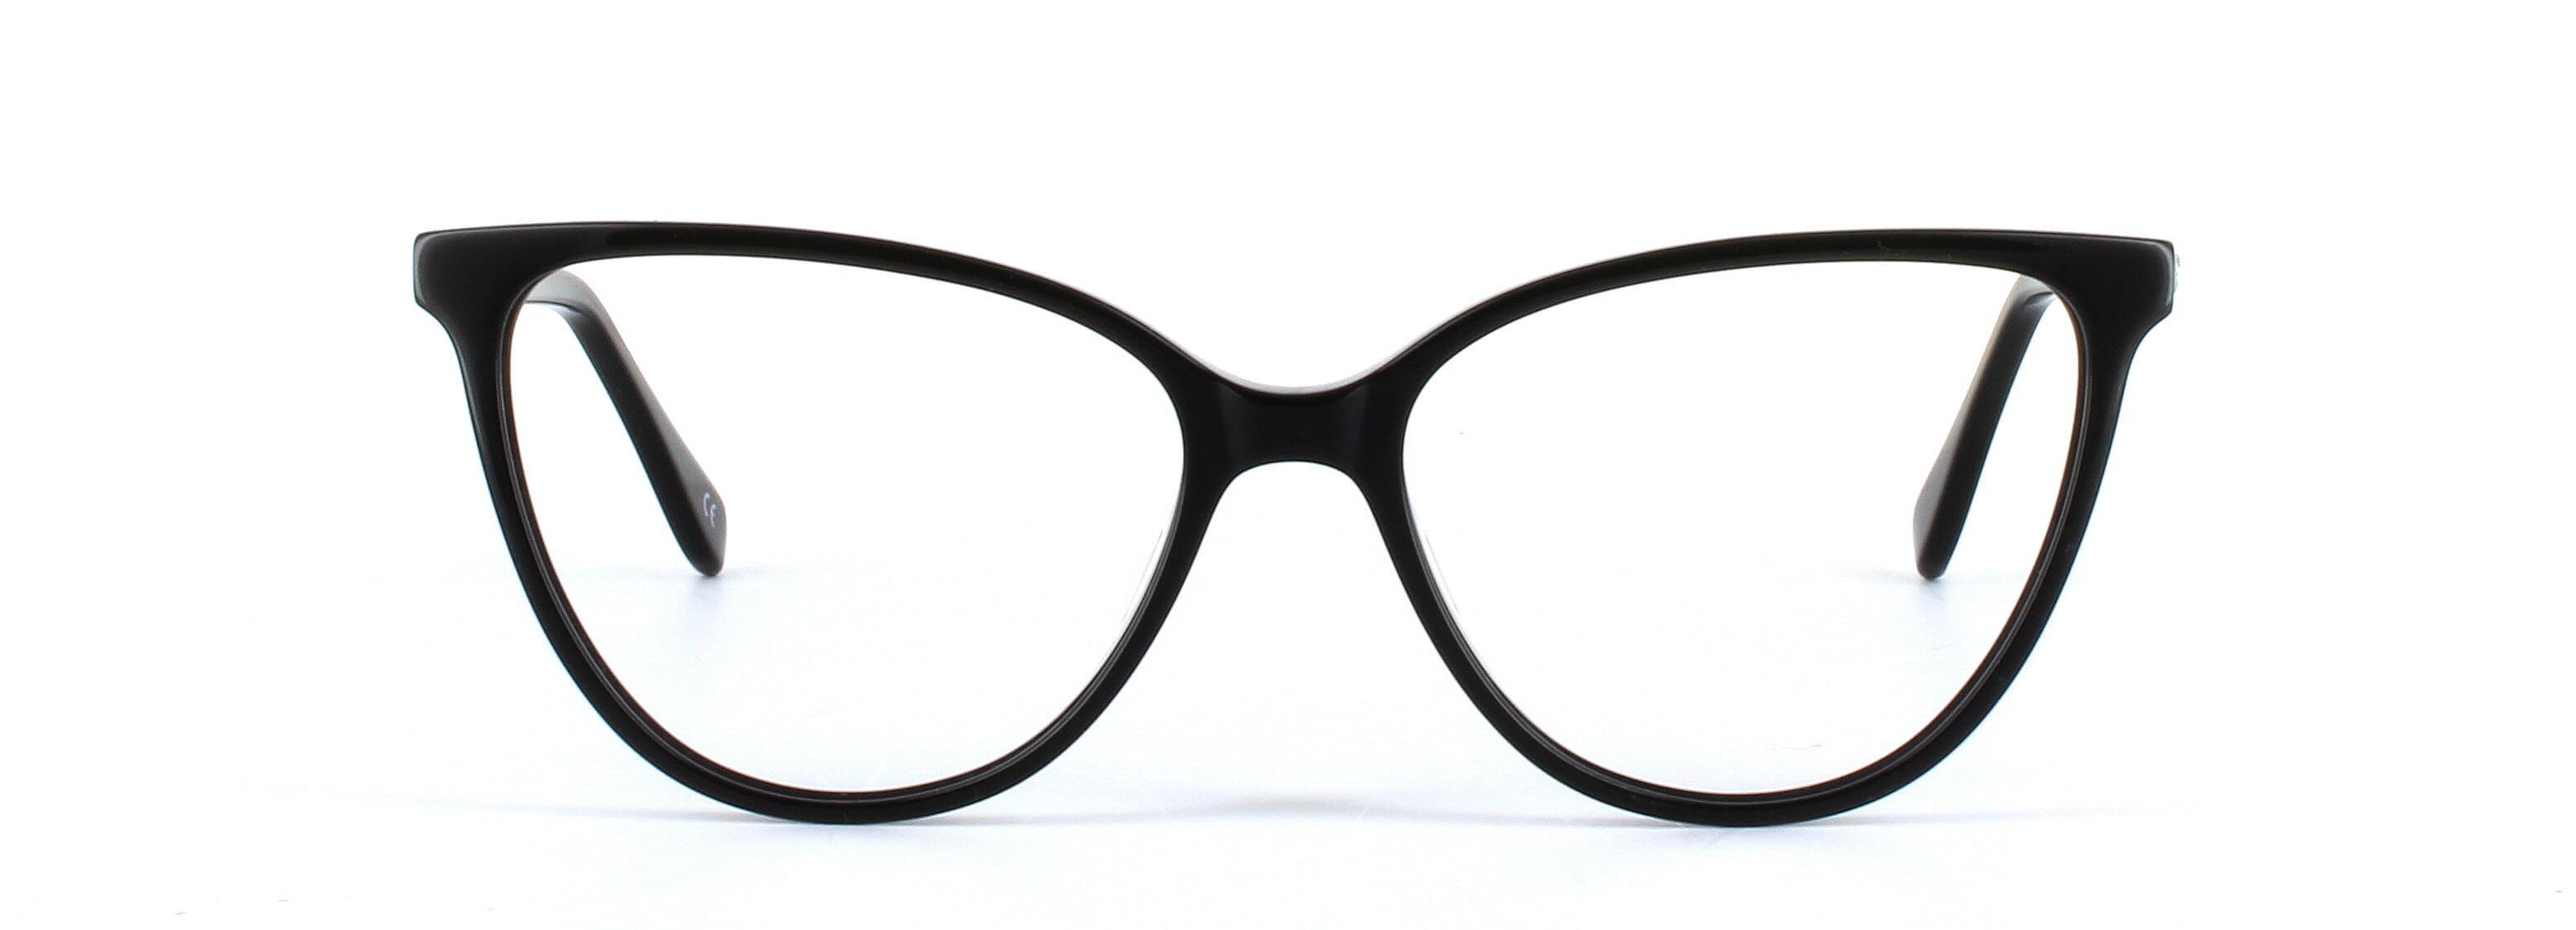 Leigh Black Full Rim Cat Eye Acetate Glasses - Image View 5